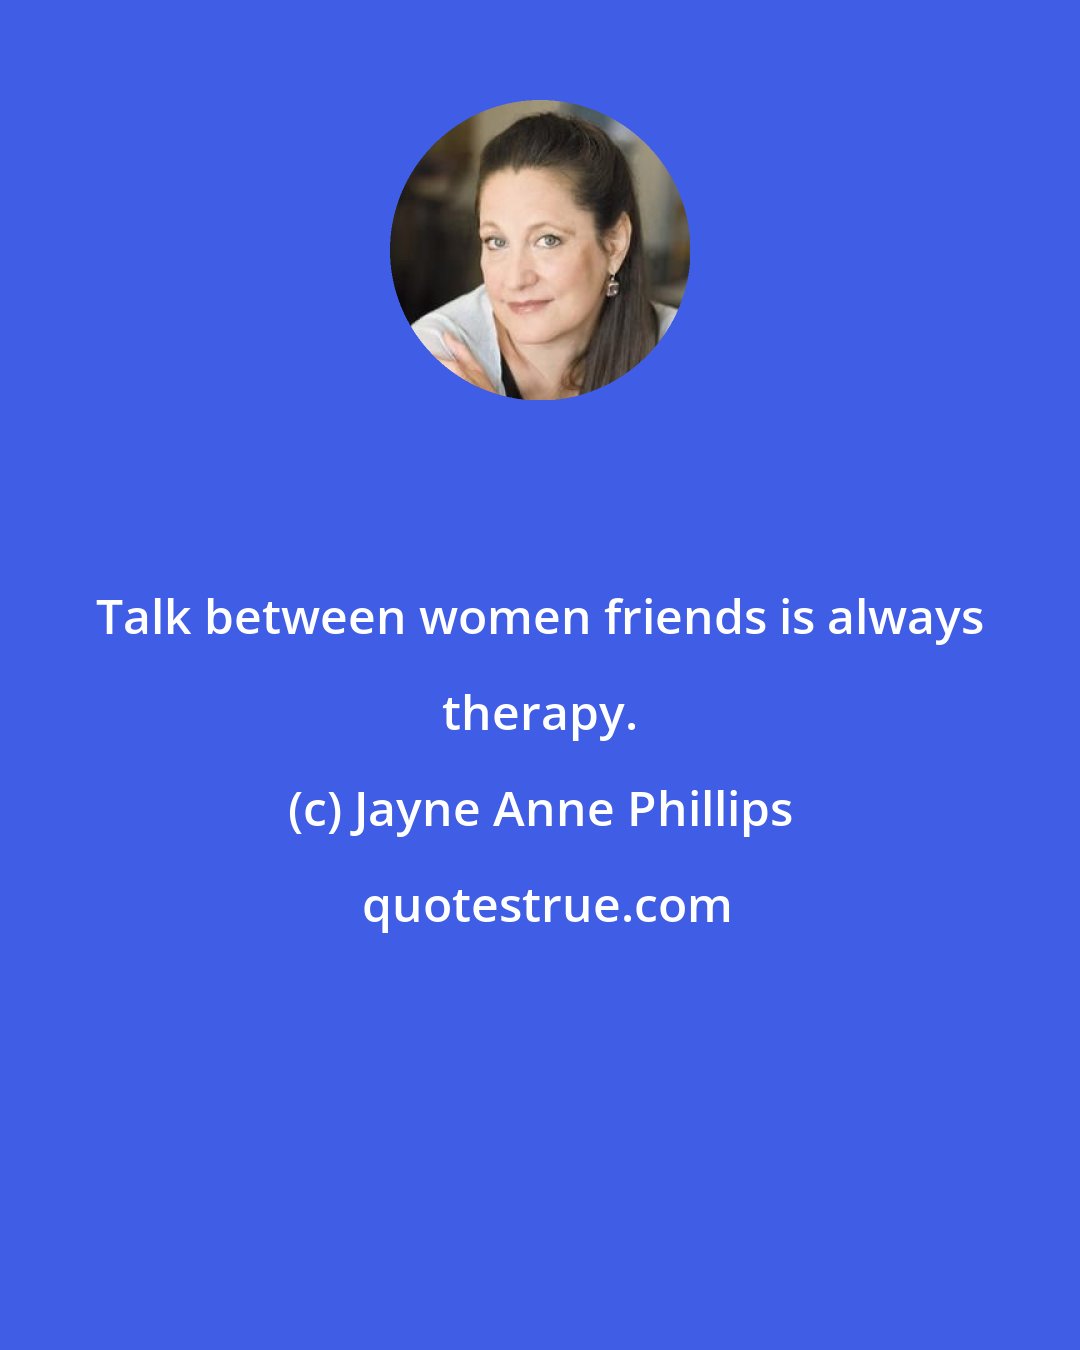 Jayne Anne Phillips: Talk between women friends is always therapy.